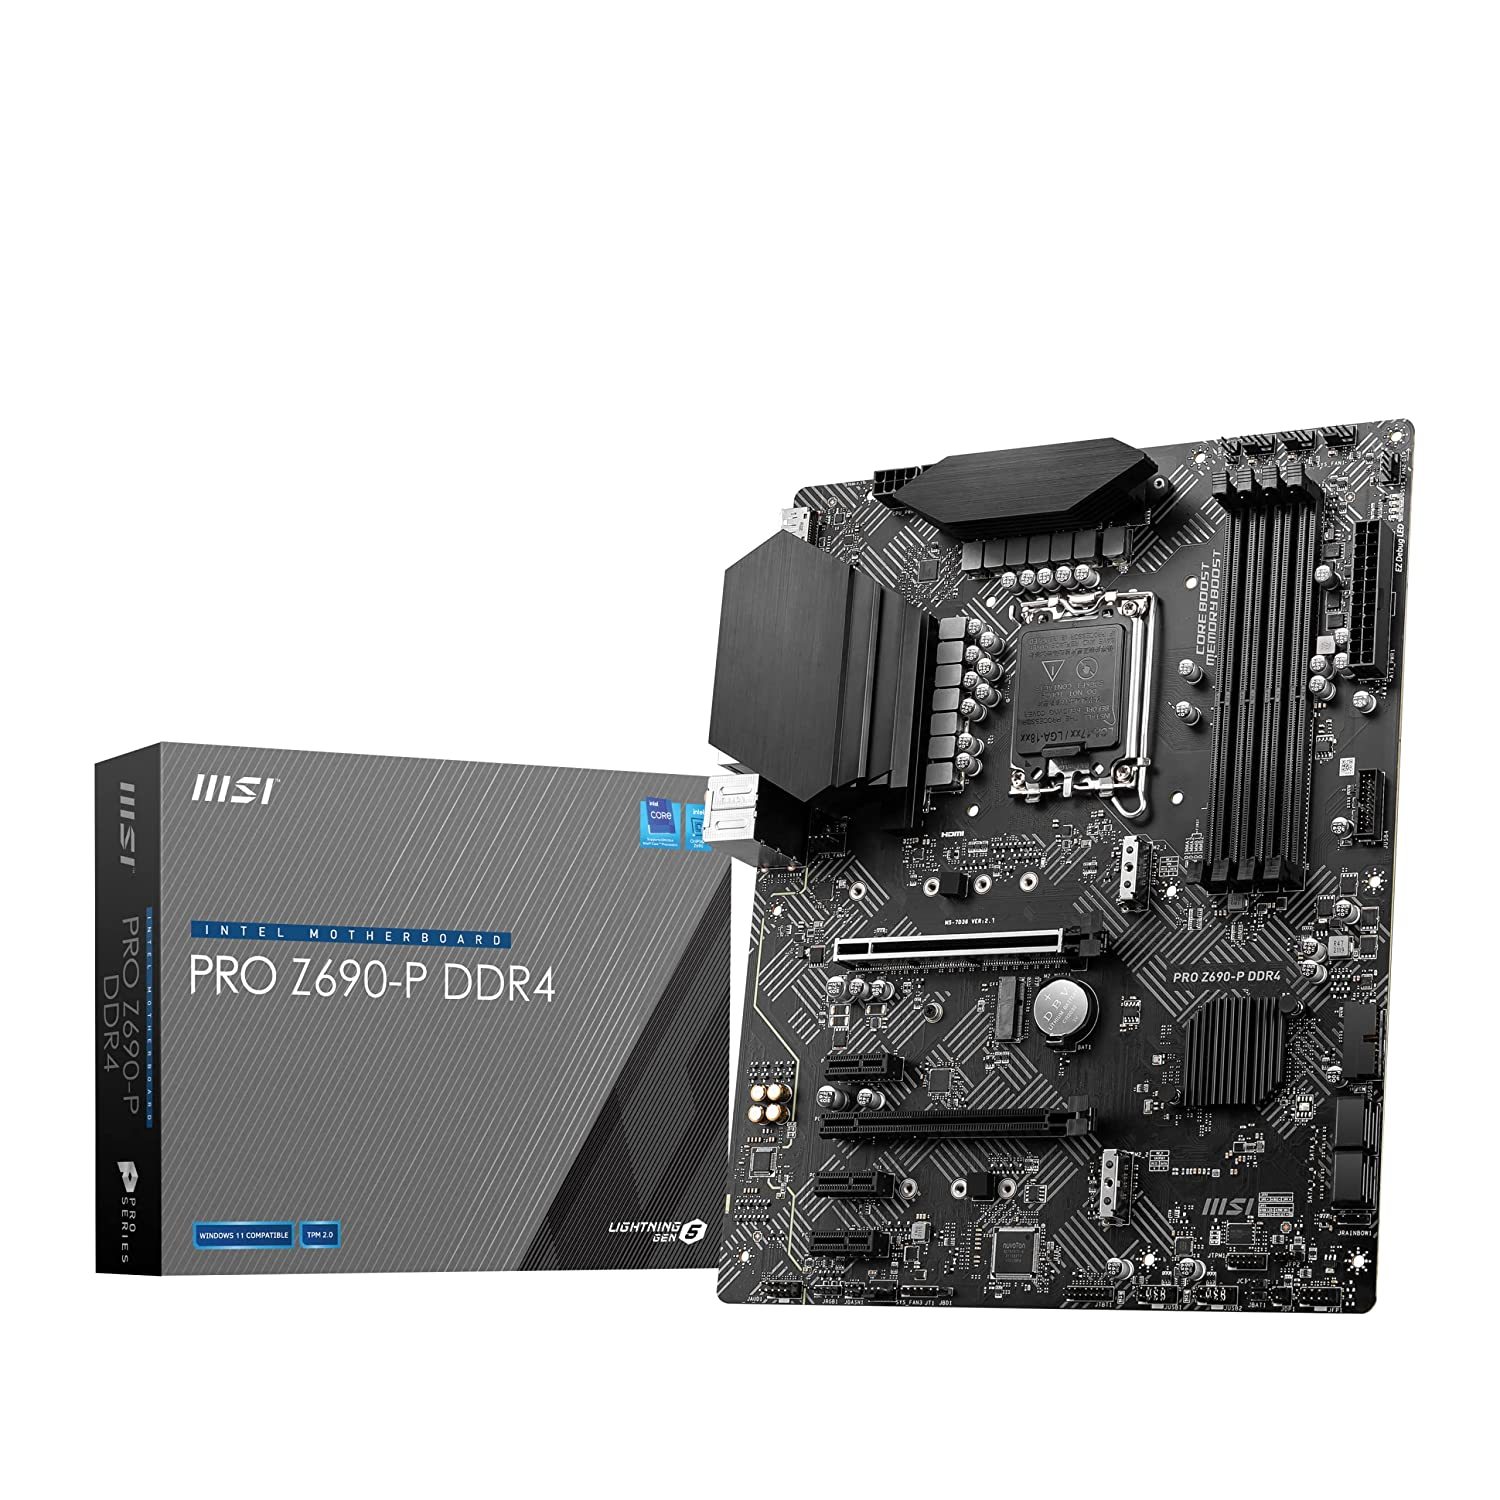 Primary image for MSI PRO Z690-P DDR4 ProSeries Motherboard (ATX, 12th Gen Intel Core, LGA 1700 So